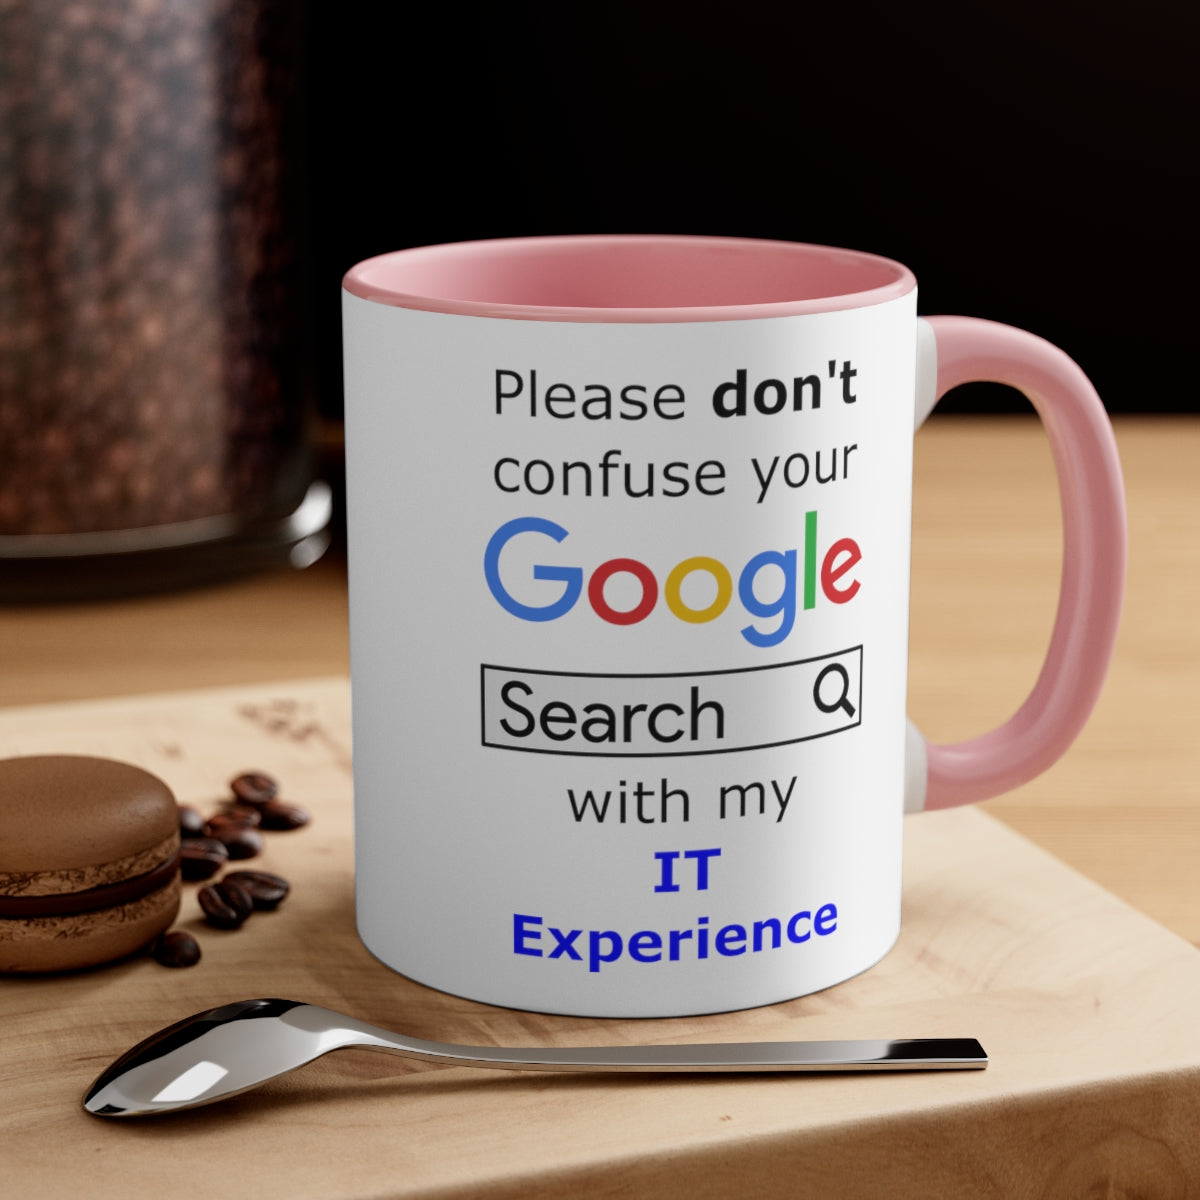 Google IT Experience - Accent Coffee Mug, 11oz